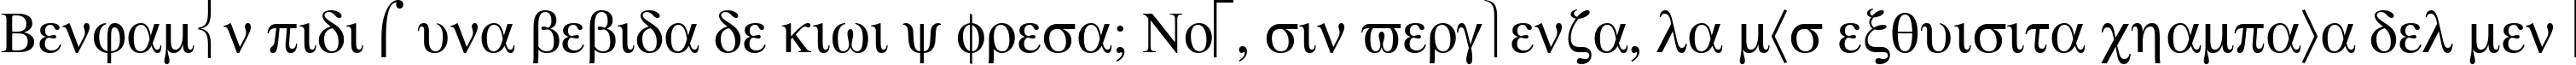 Пример написания шрифтом SymbolPS текста на испанском